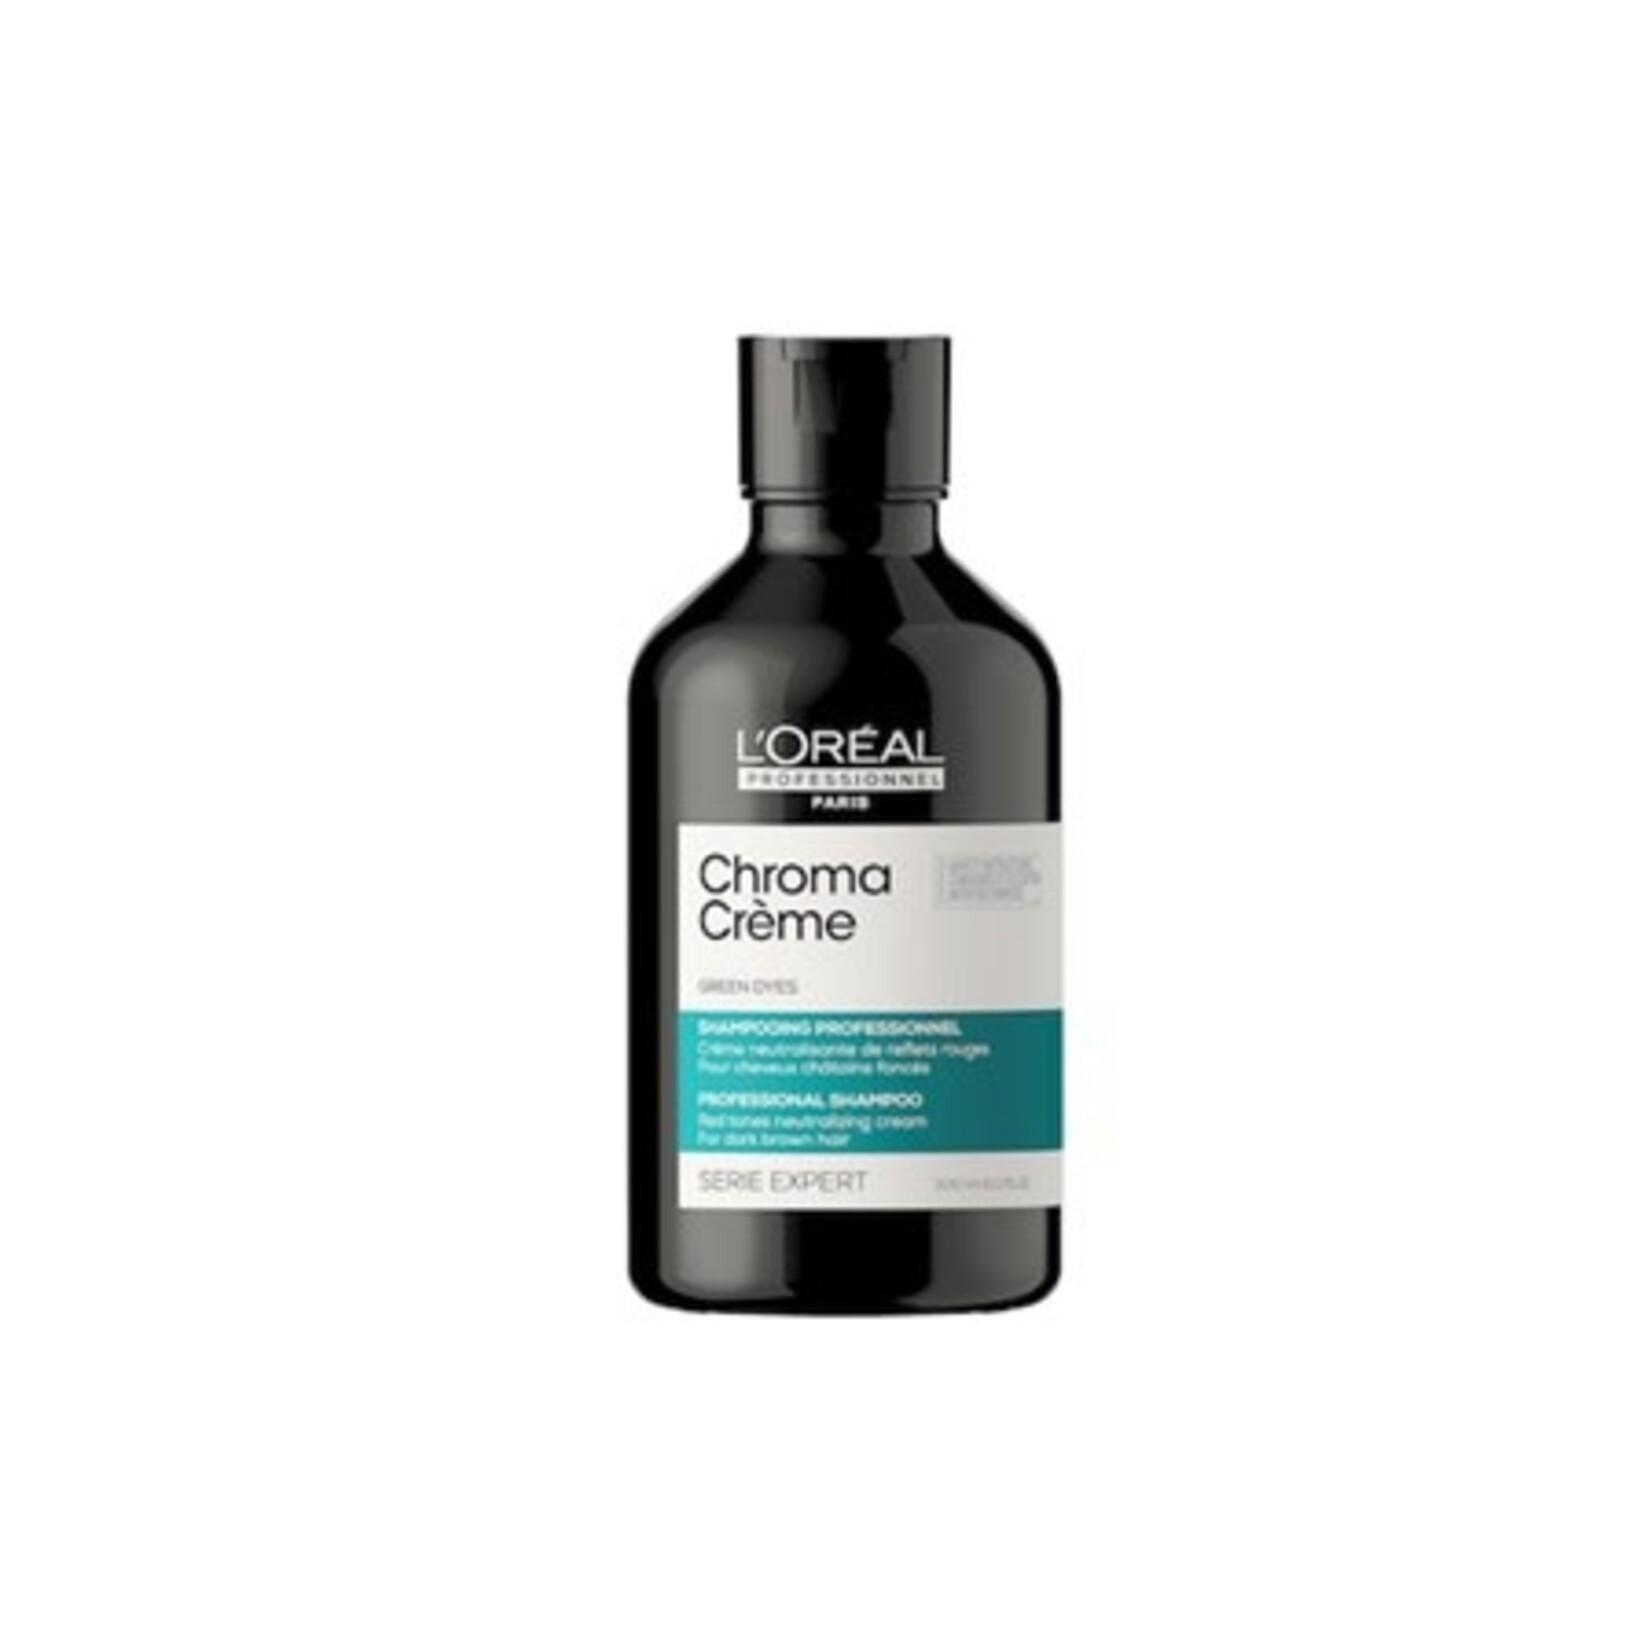 L'Oréal L'Oréal Professionnel - Chroma Crème - Shampoo Green 300ml